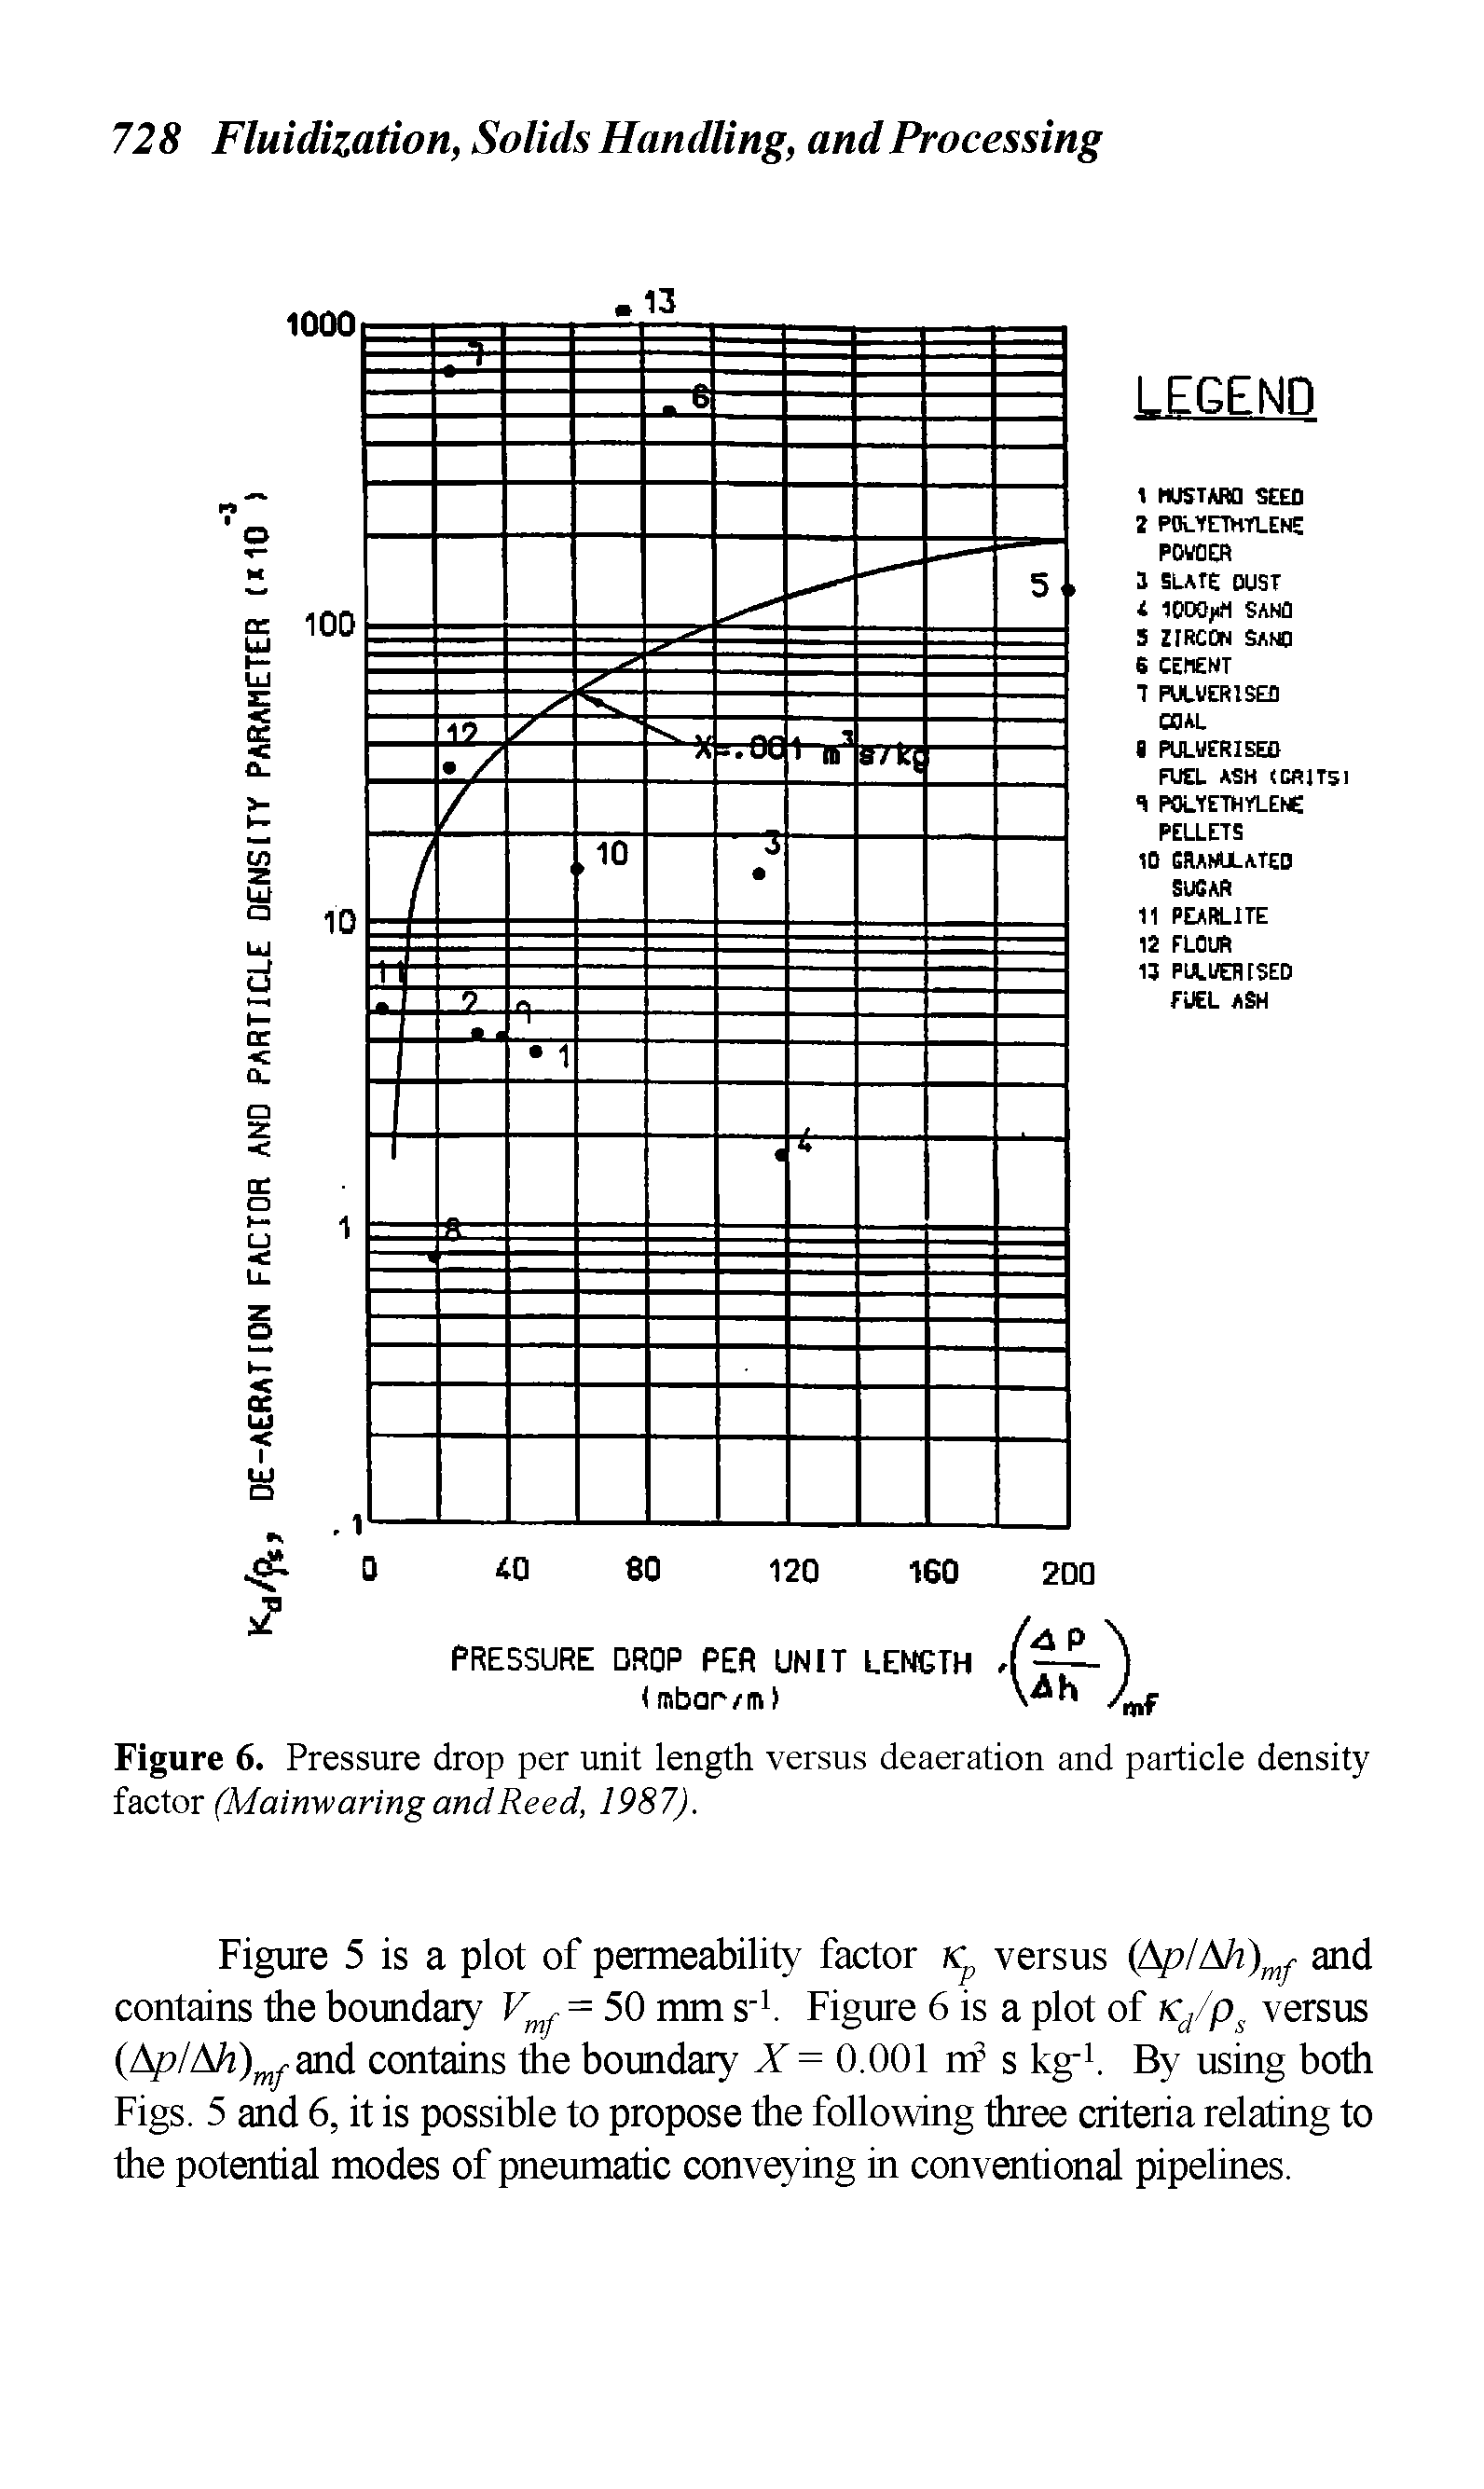 Figure 6. Pressure drop per unit length versus deaeration and particle density factor (Mainwaring and Reed, 1987).